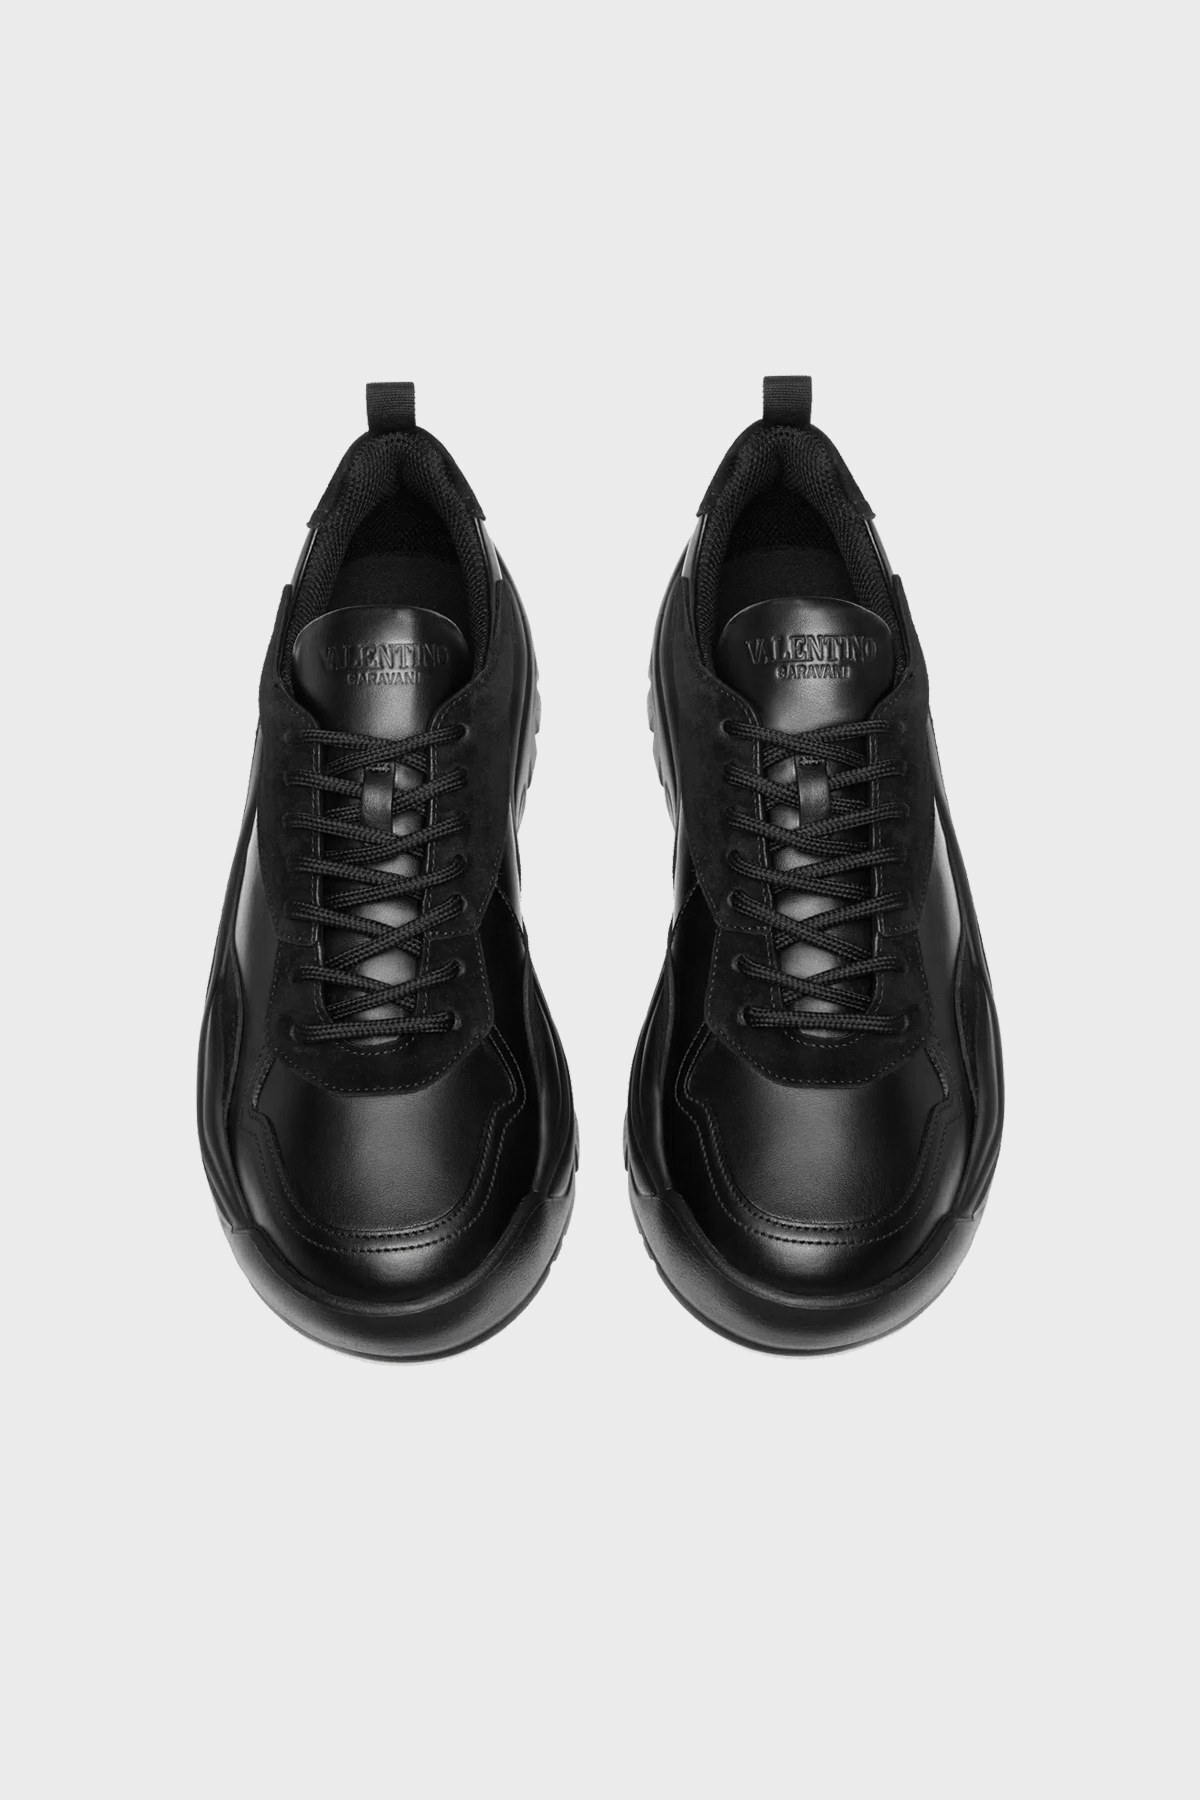 Valentino Garavani Logolu Hakiki Deri Sneaker Erkek Ayakkabı 1Y2S0B17VRNN01 SİYAH